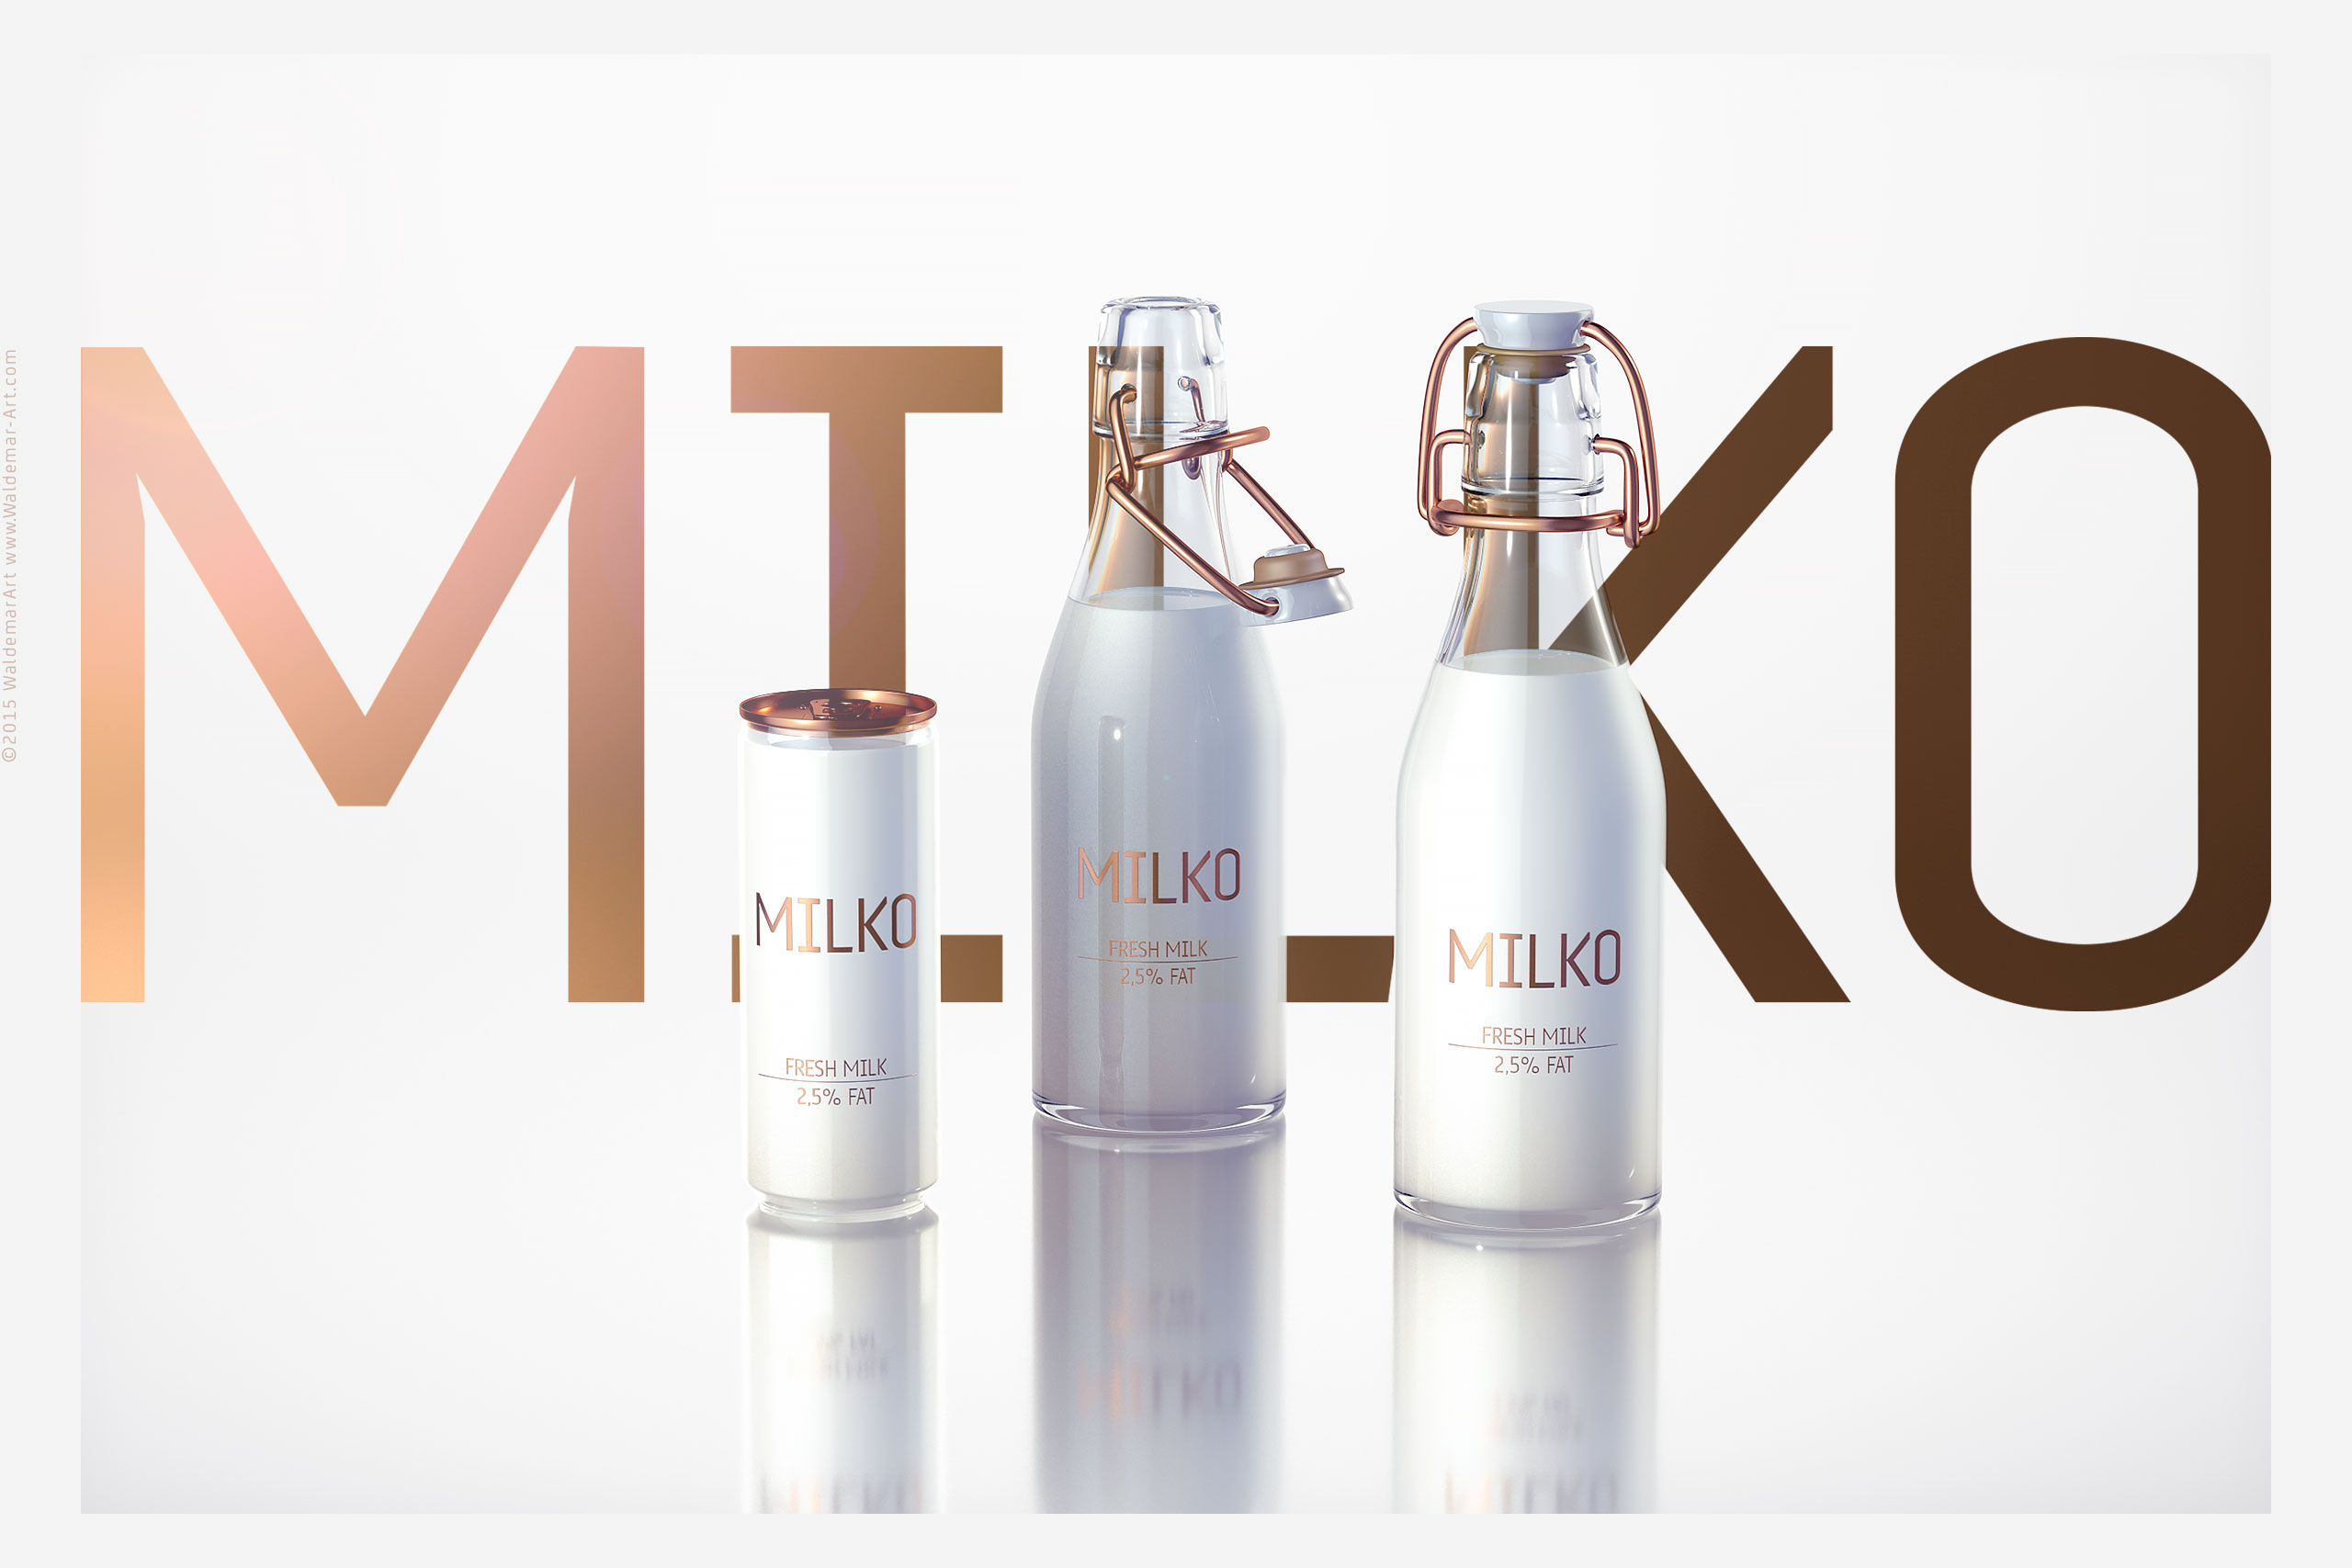 MILKO Bottle and can 3D Models